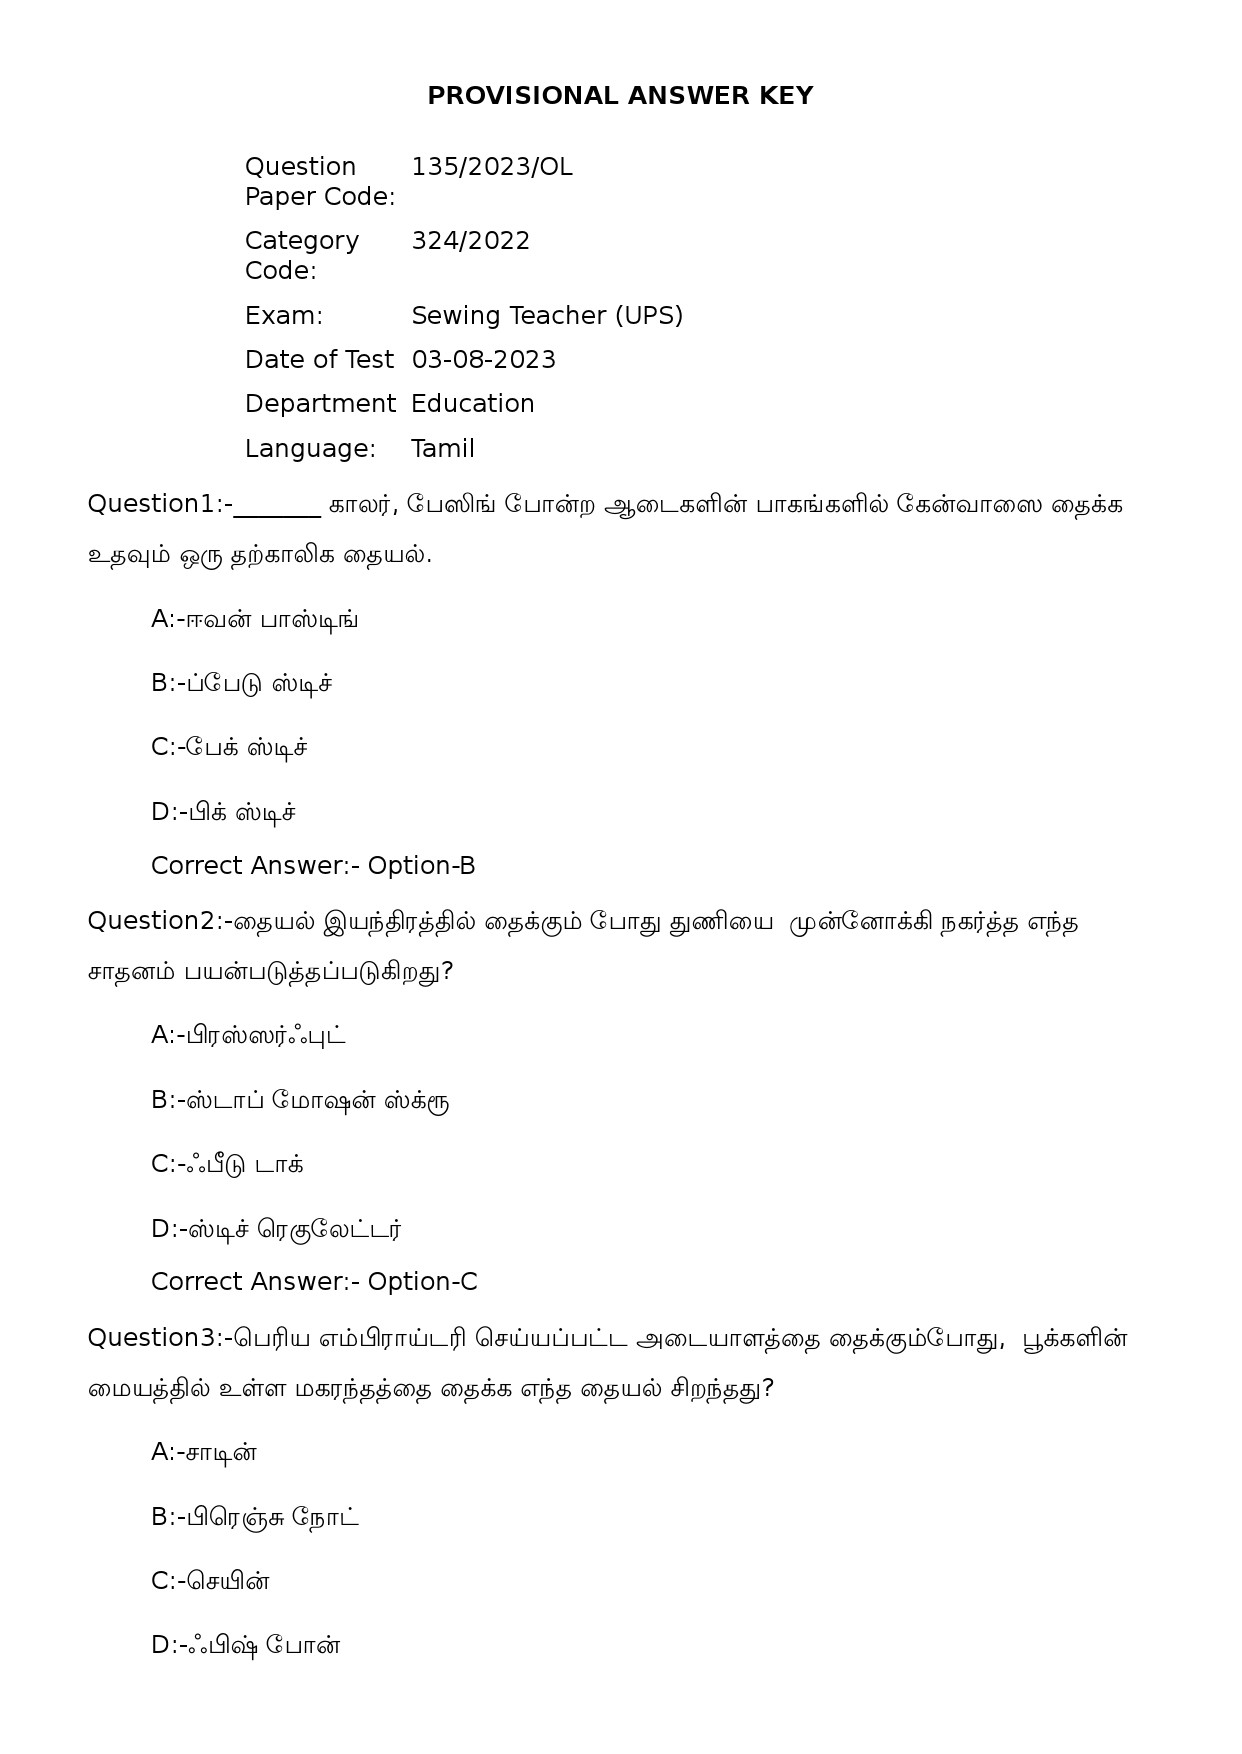 KPSC Sewing Teacher UPS Tamil Exam 2023 Code 1352023OL 1